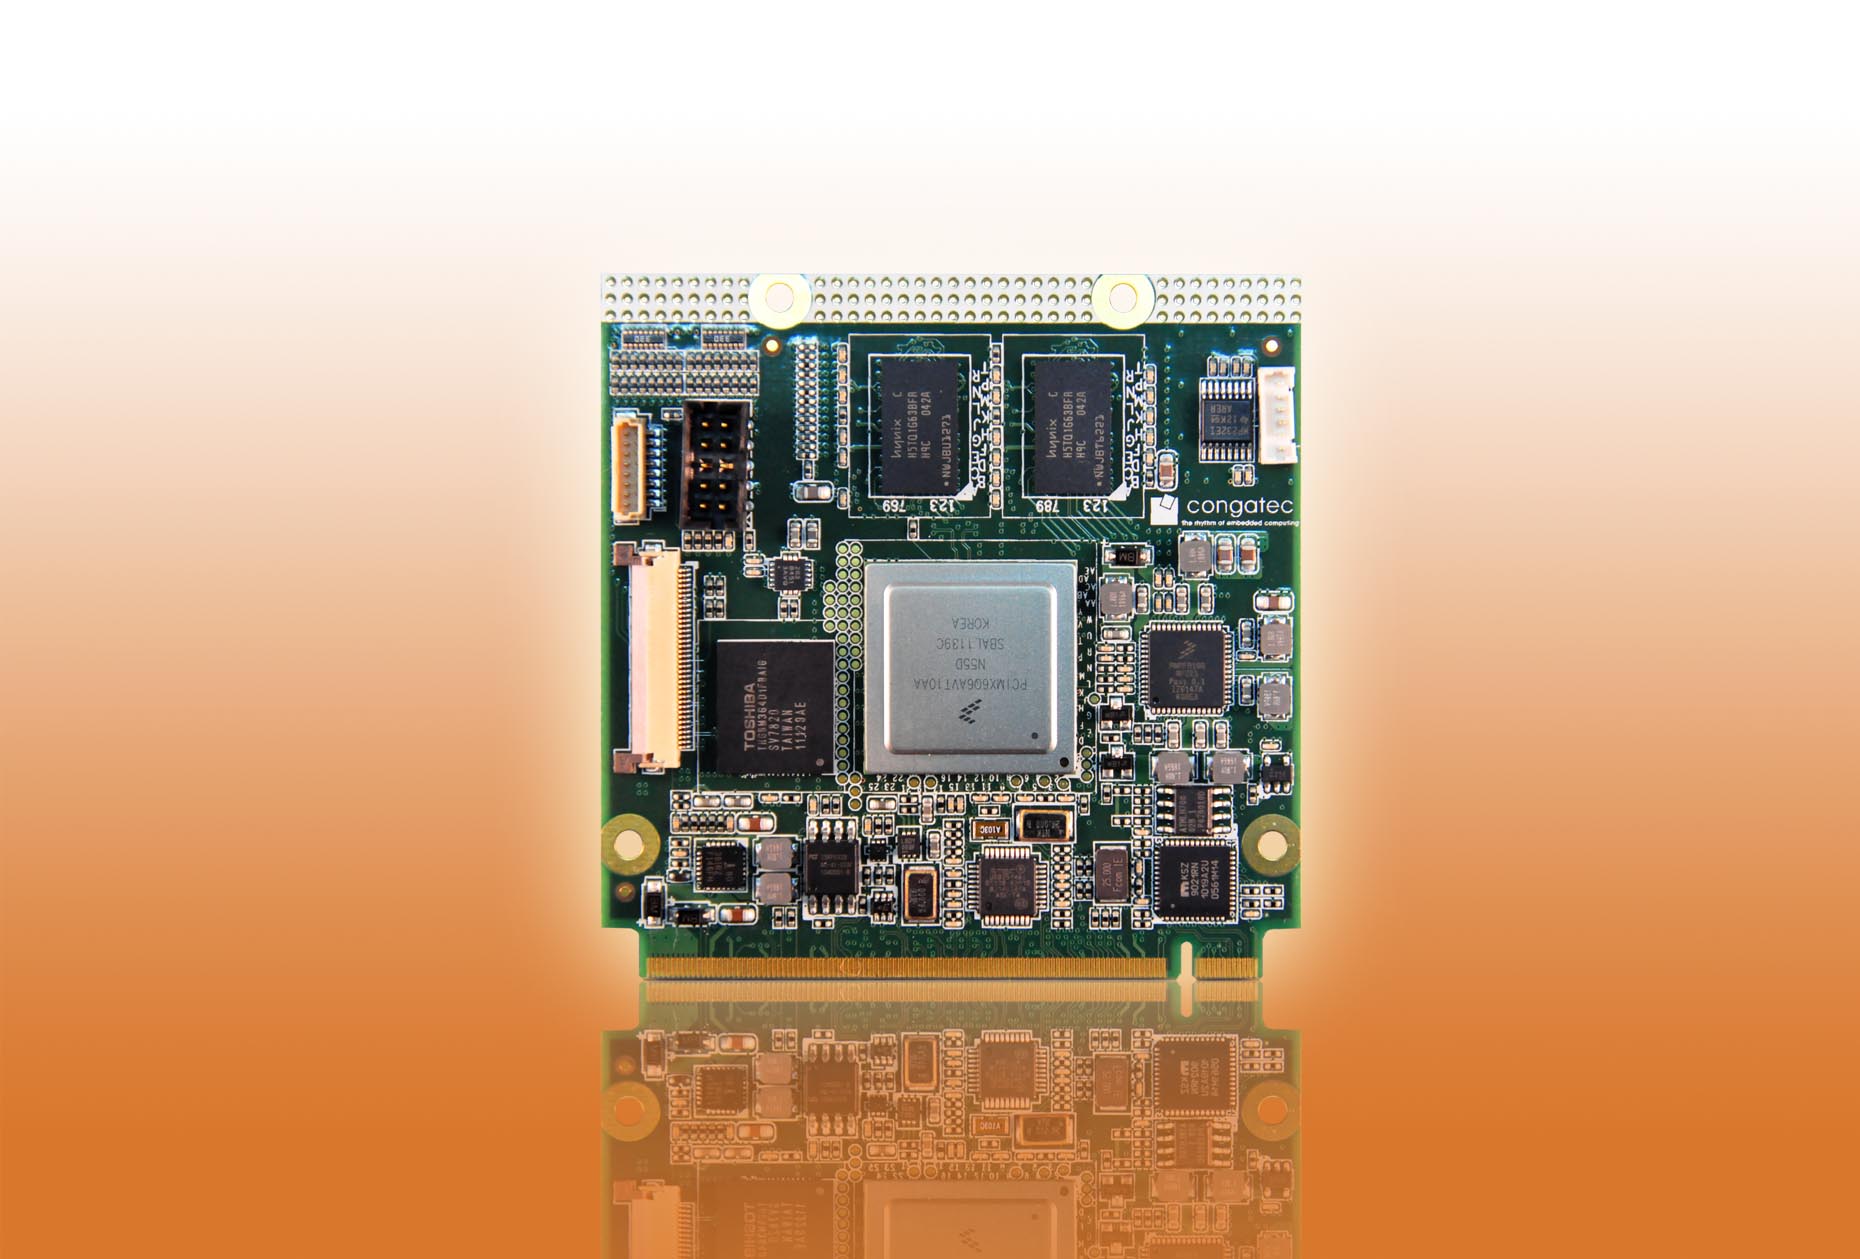 Figure 1: The conga-QMX6 Qseven ARM module with Freescale i.MX6 processor